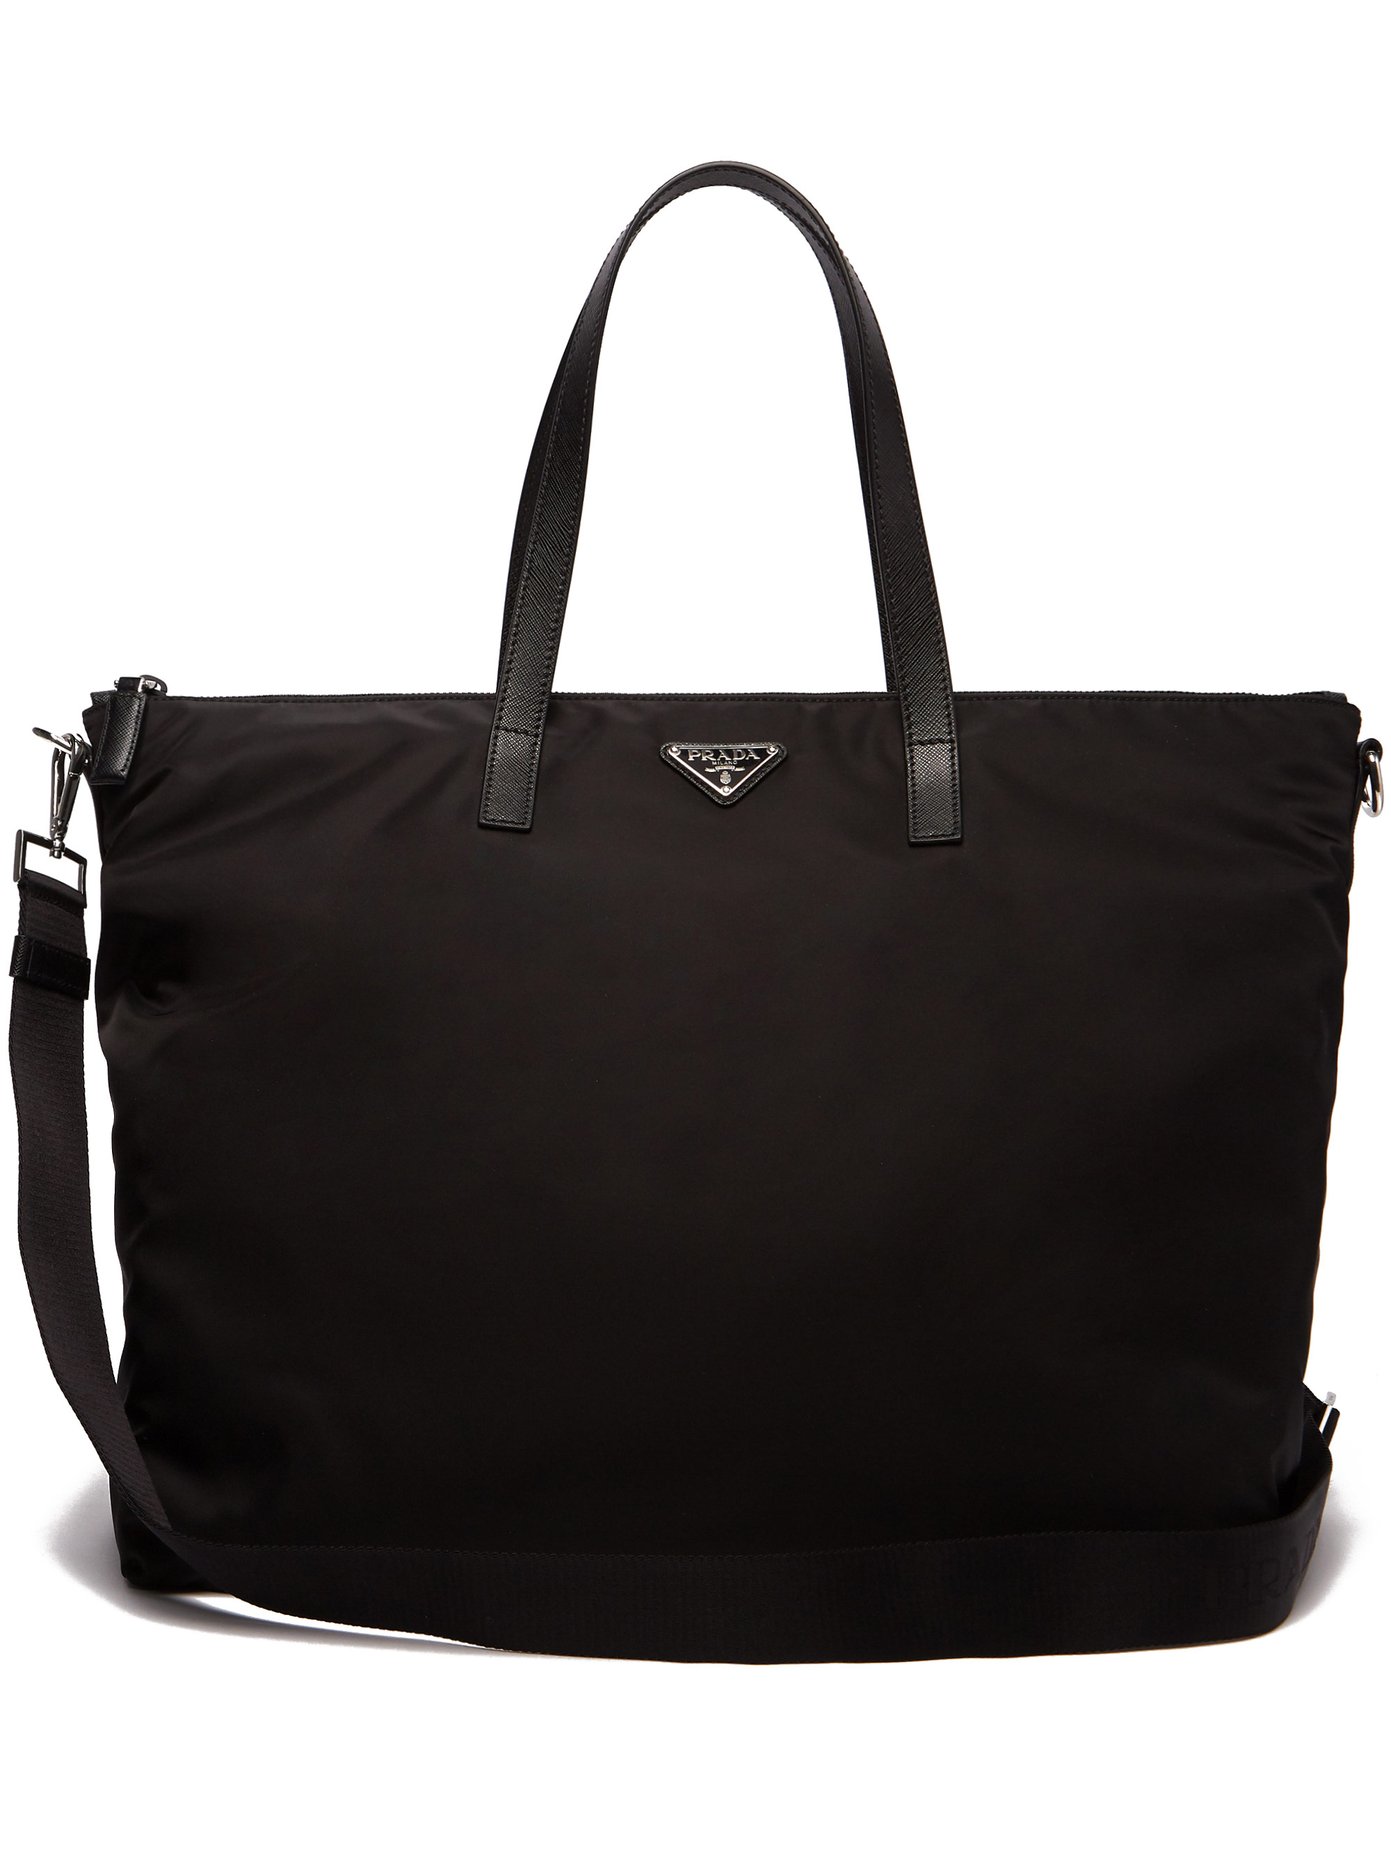 prada fabric handbag with leather trim 